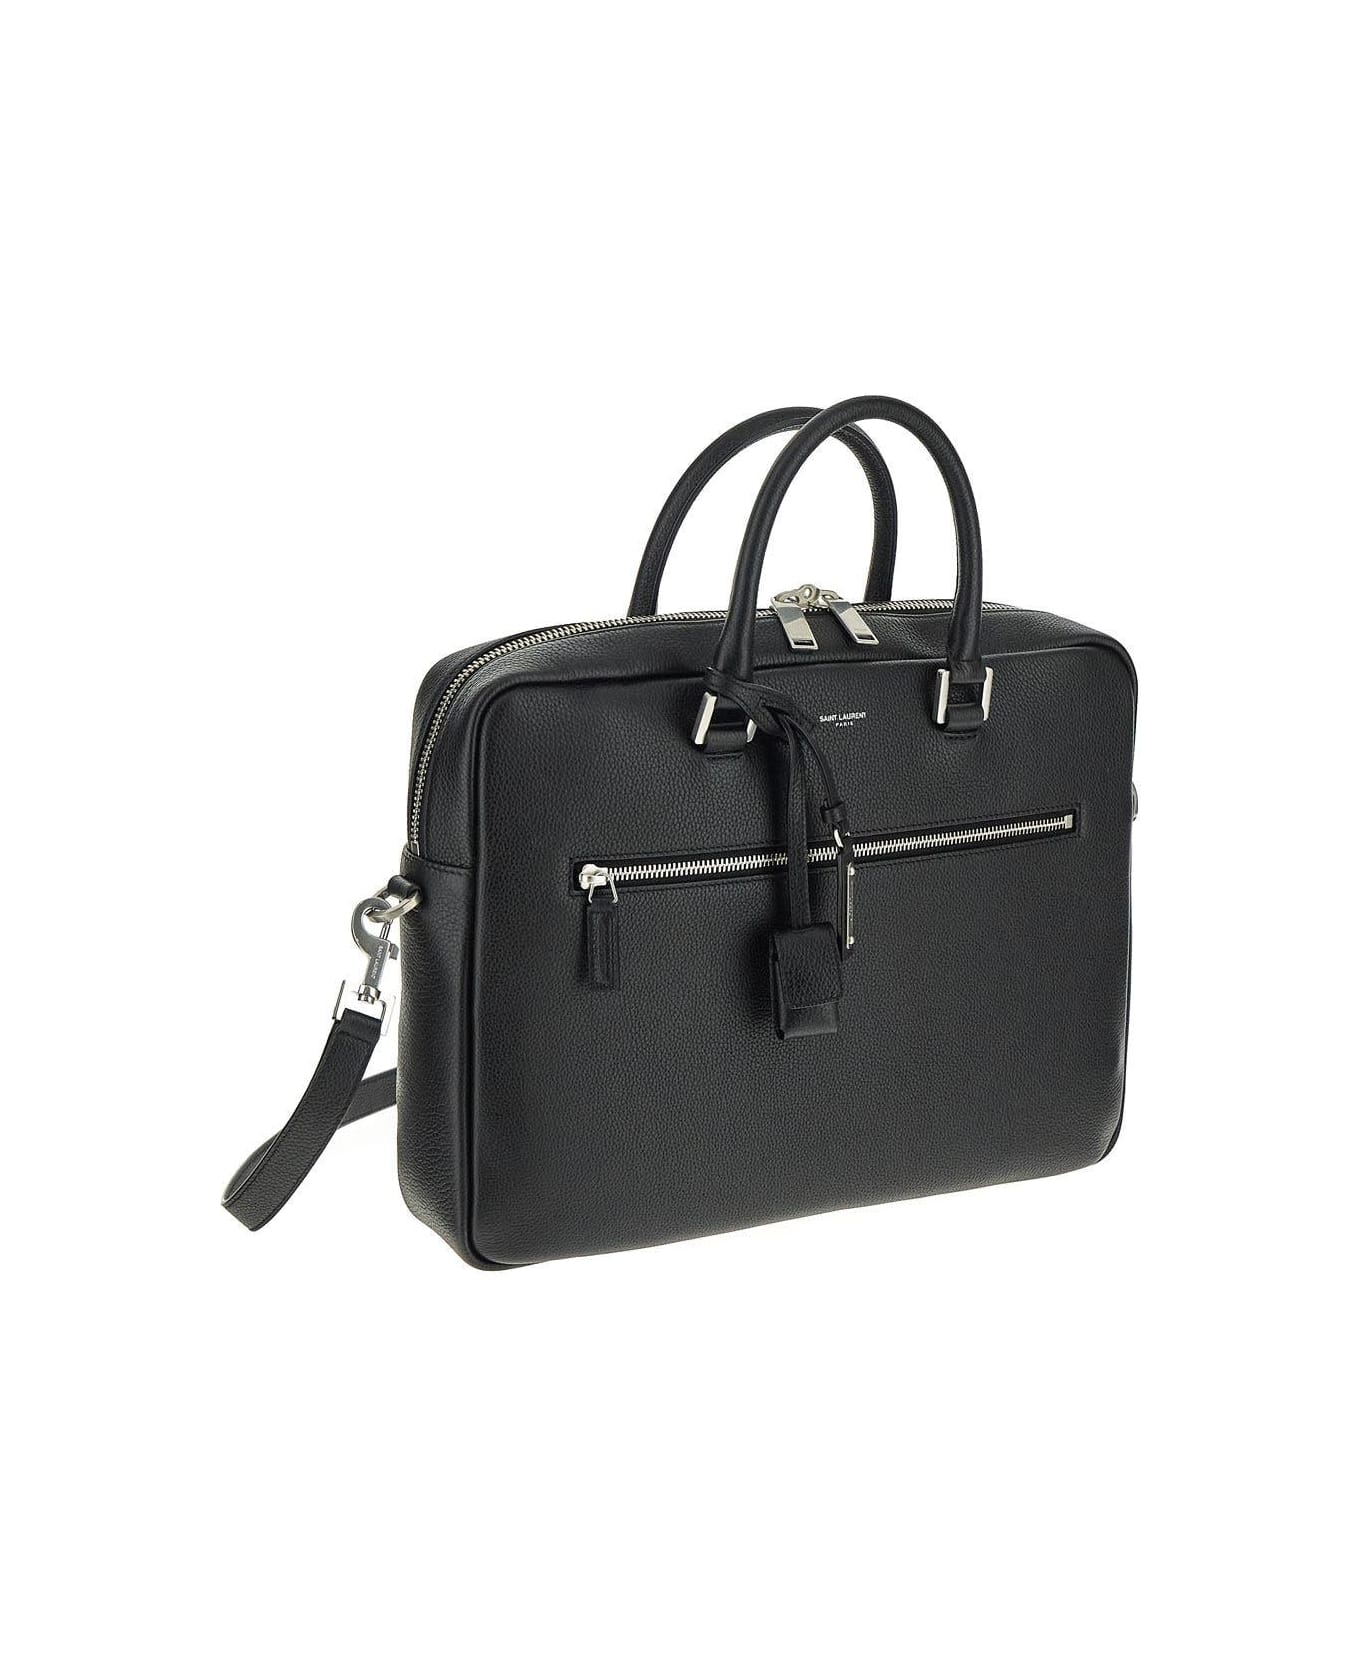 Saint Laurent Sac De Jour Briefcase In Grained Leather - Nero